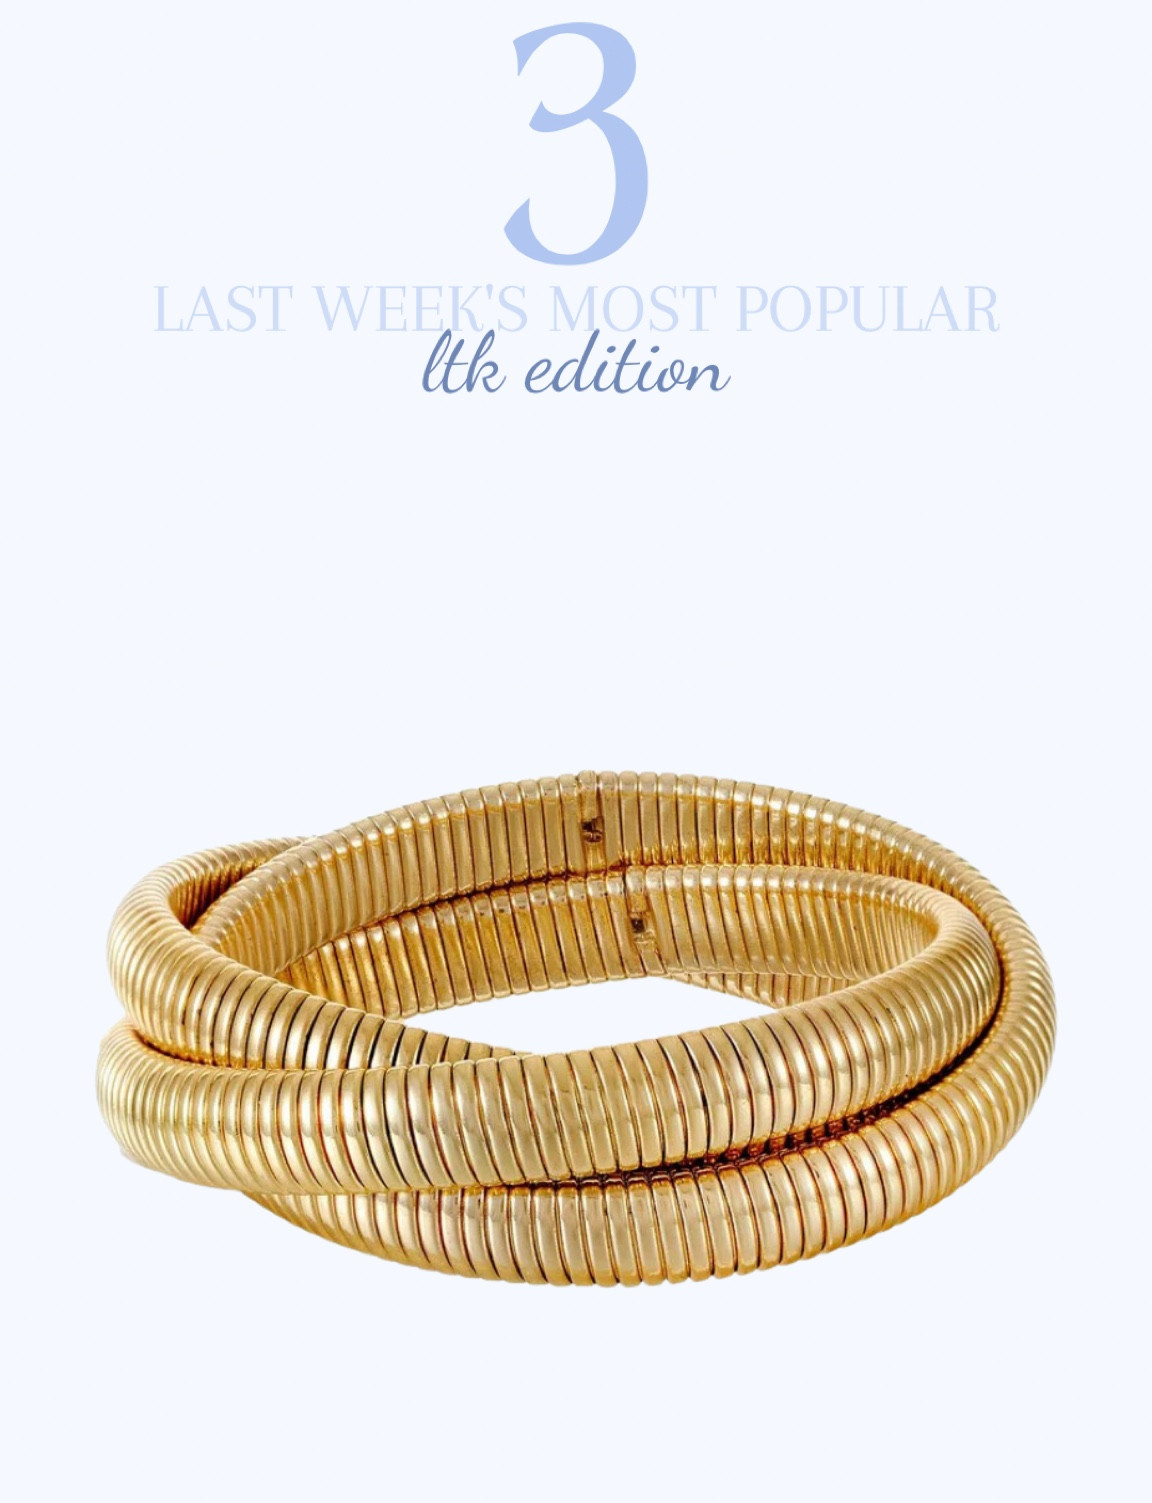 Time and Tru Women's Gold-Tone Beaded Stretch Bracelet Set, 6-Piece 